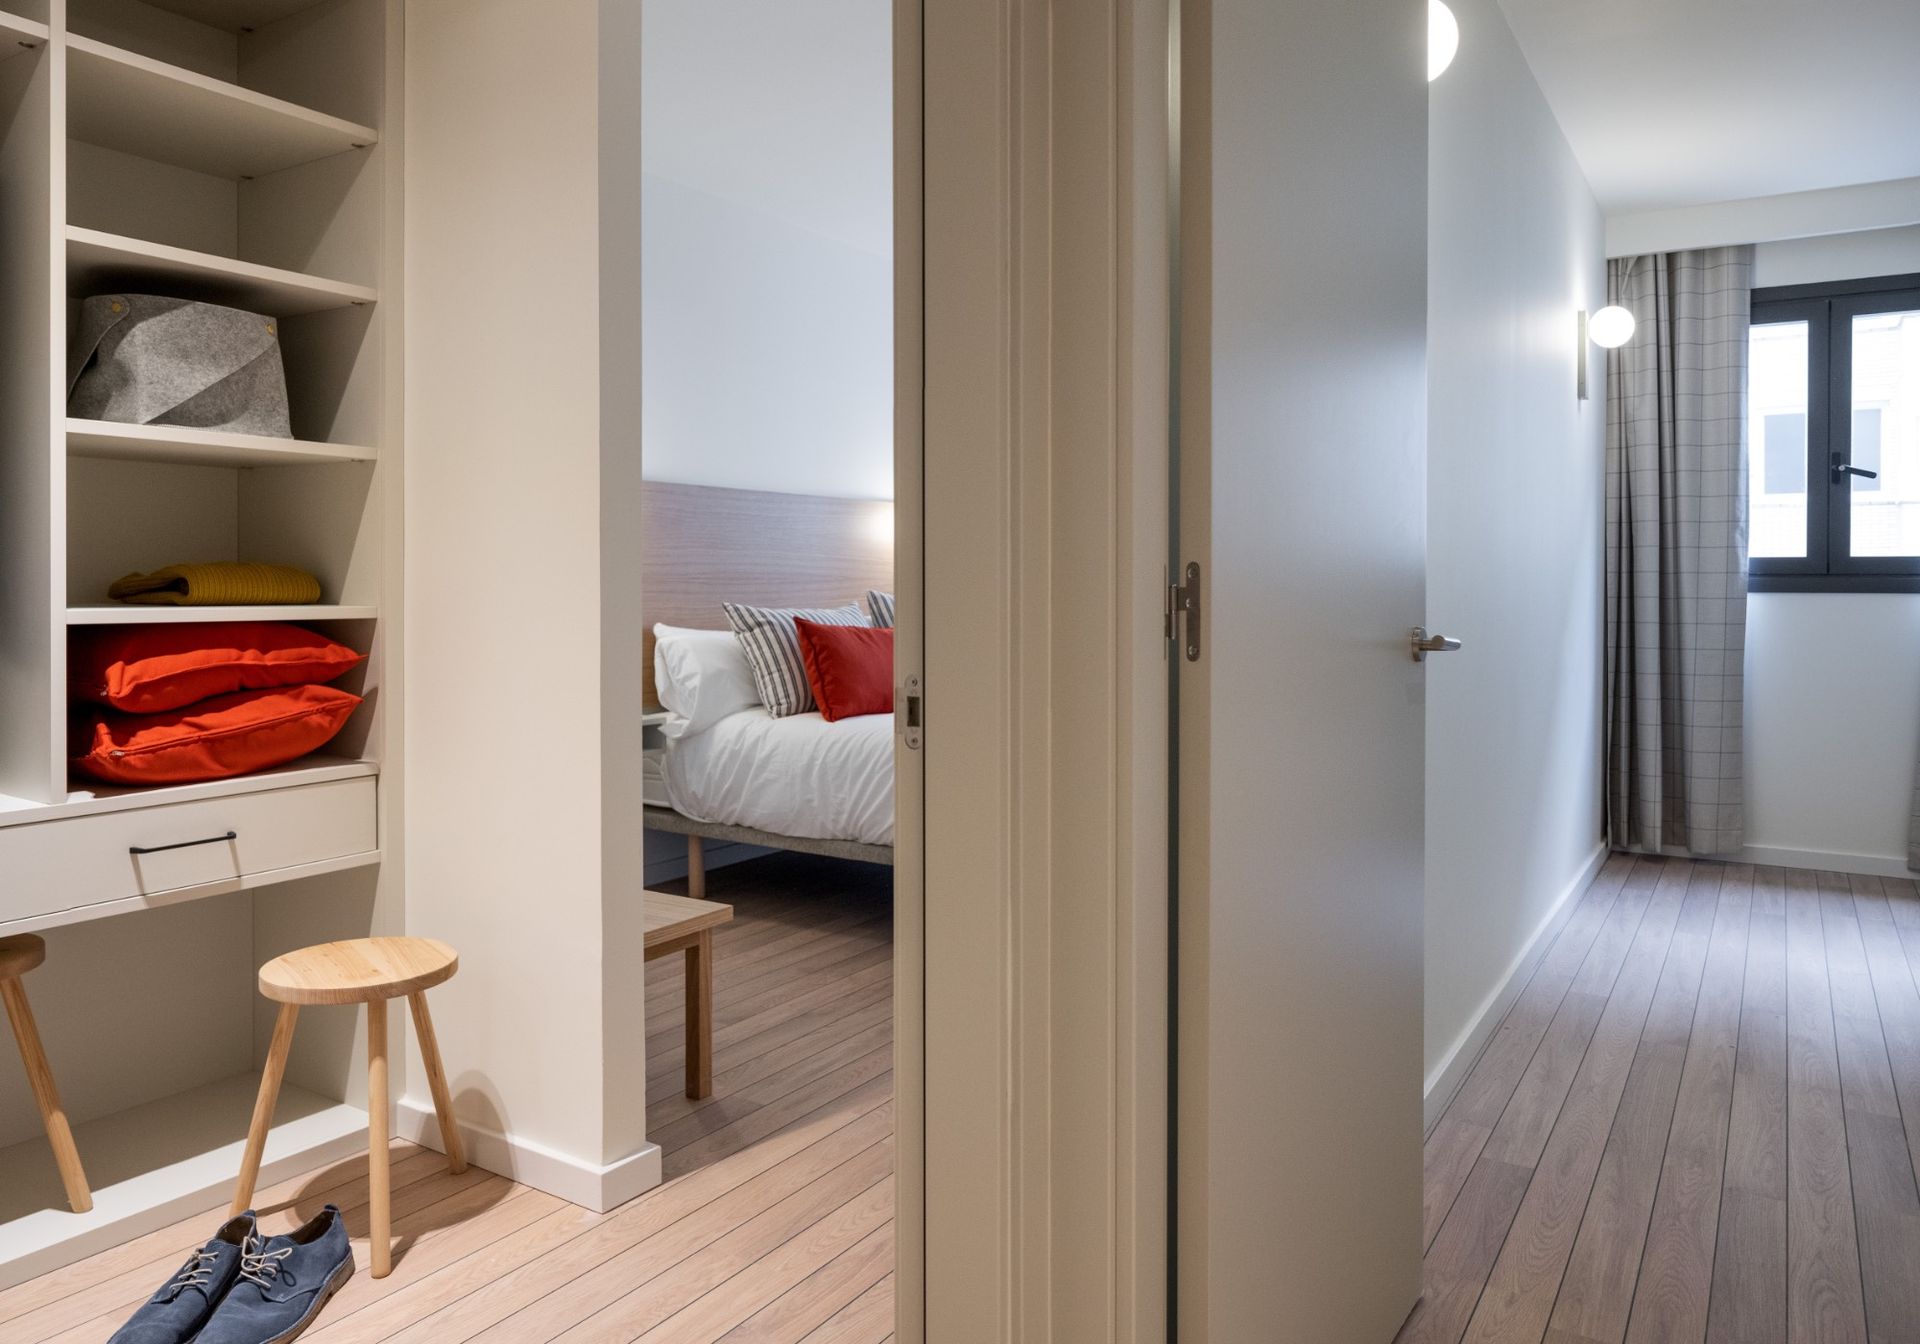 Two bedroom apartment in Vitoria city centre